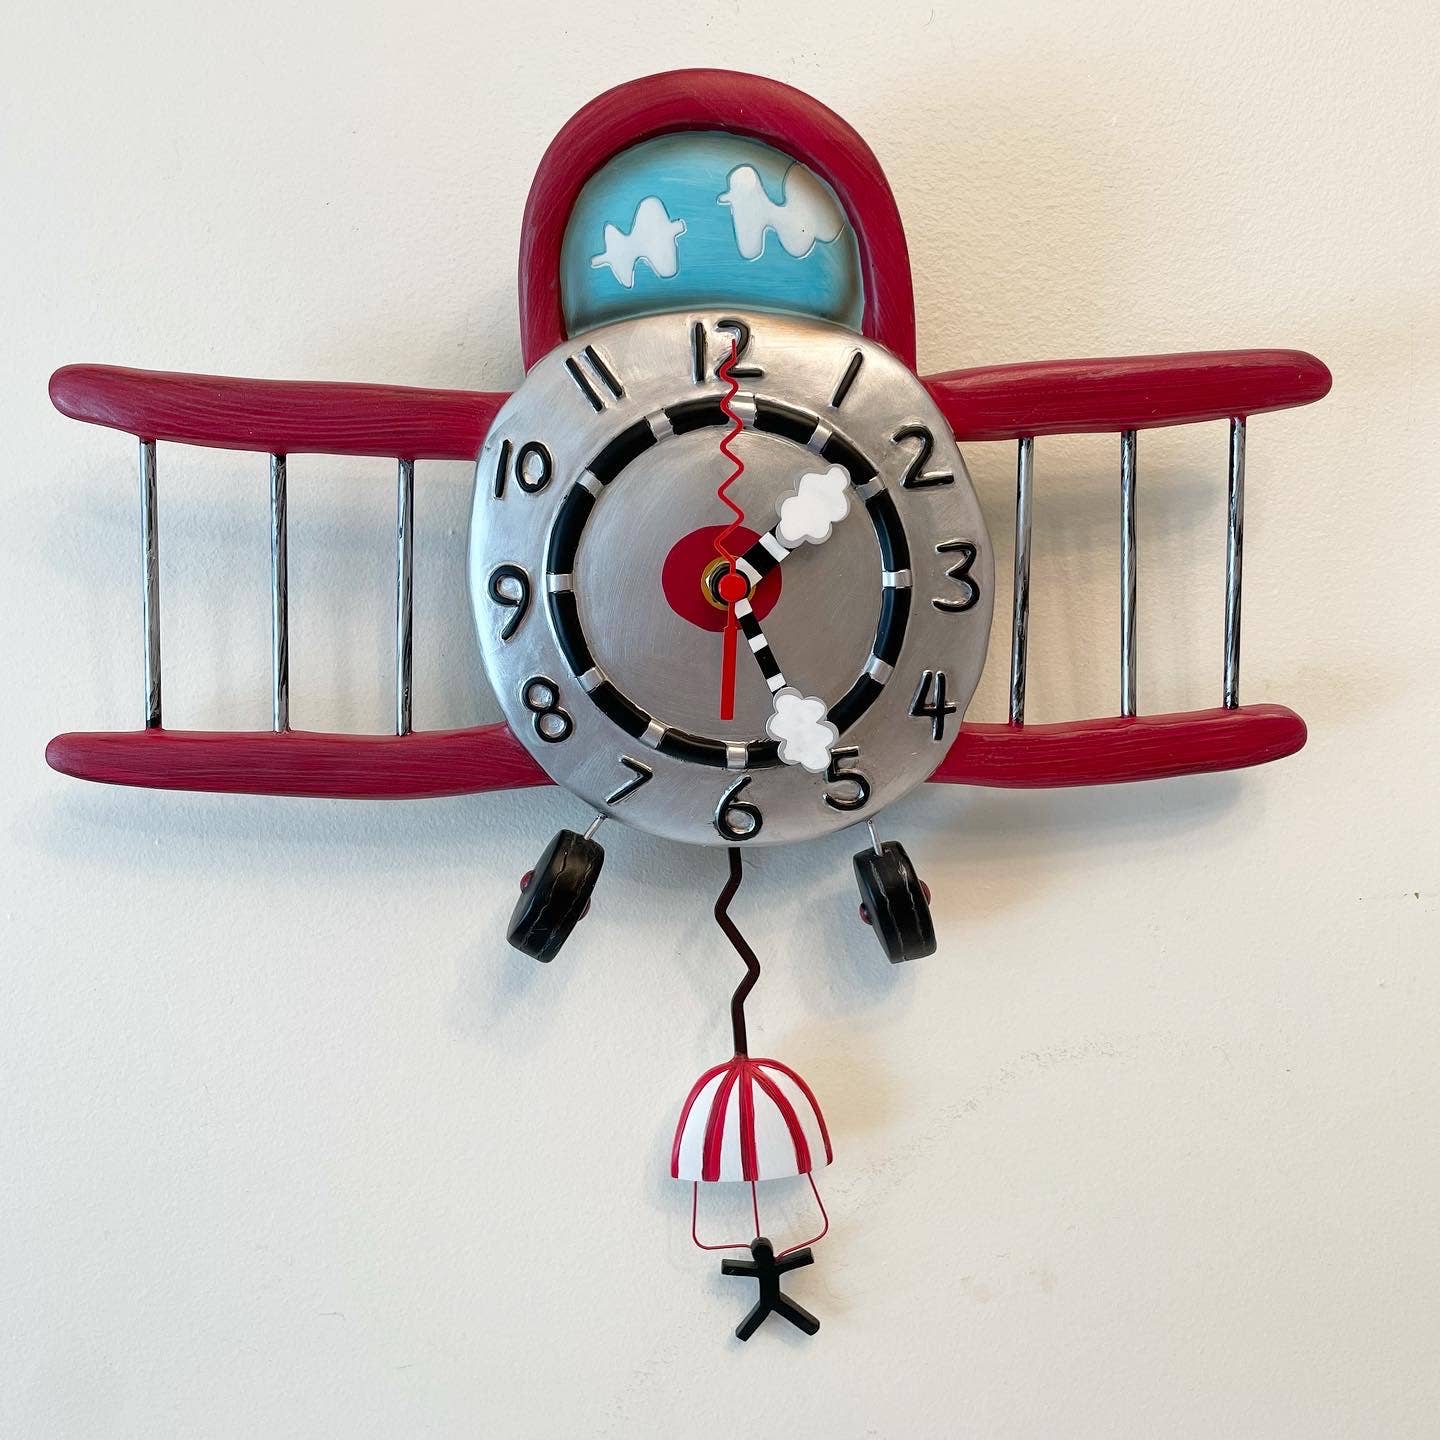 Allen Designs Airplane Jumper Novelty Pendulum Clock